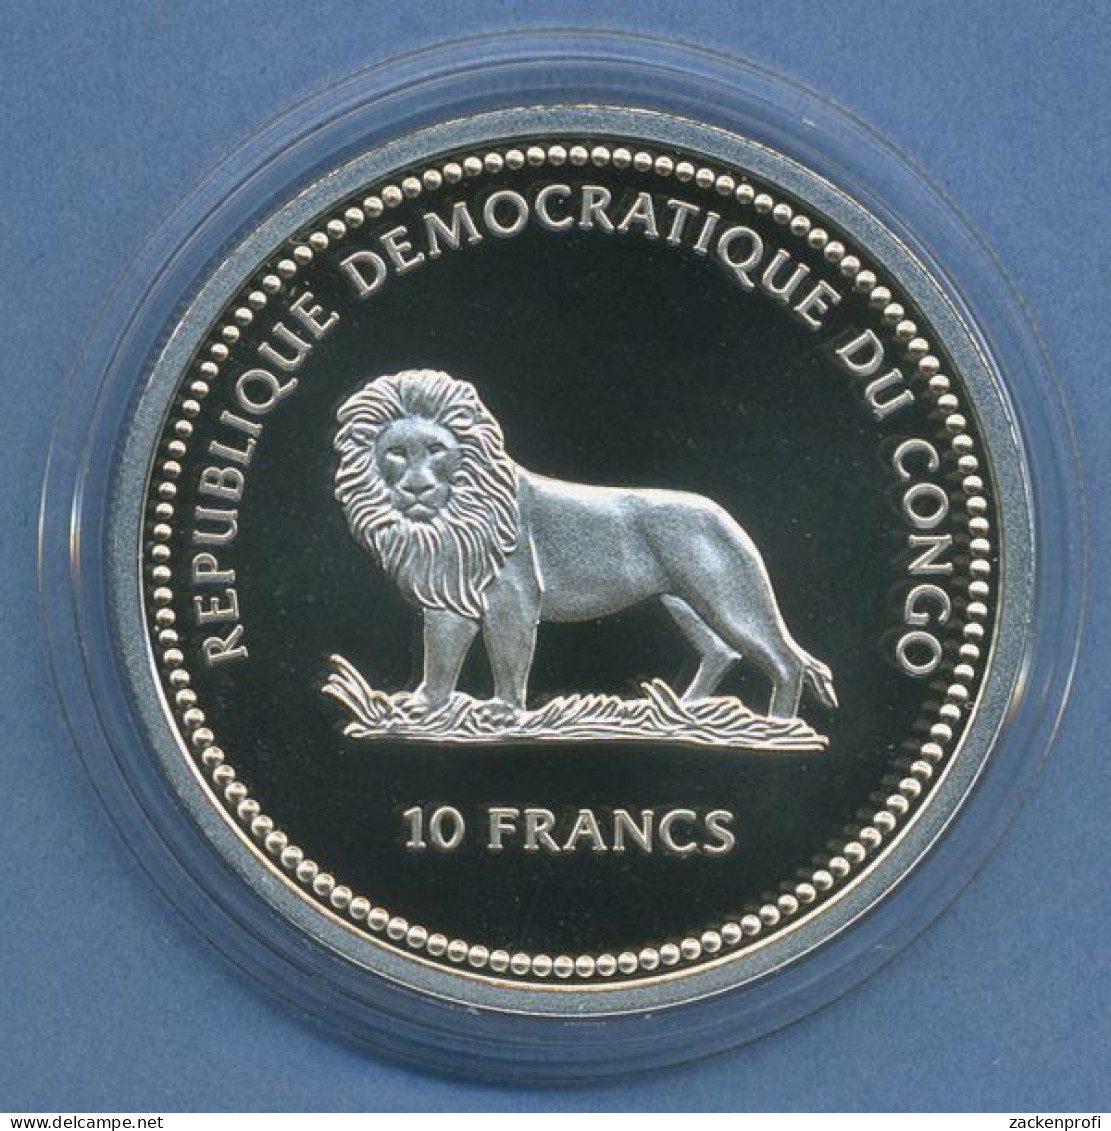 Kongo 10 Franc, 2000 Tierschutz Fische, Silber, Farbig, PP In Kapsel (m4417) - Congo (Repubblica Democratica 1998)